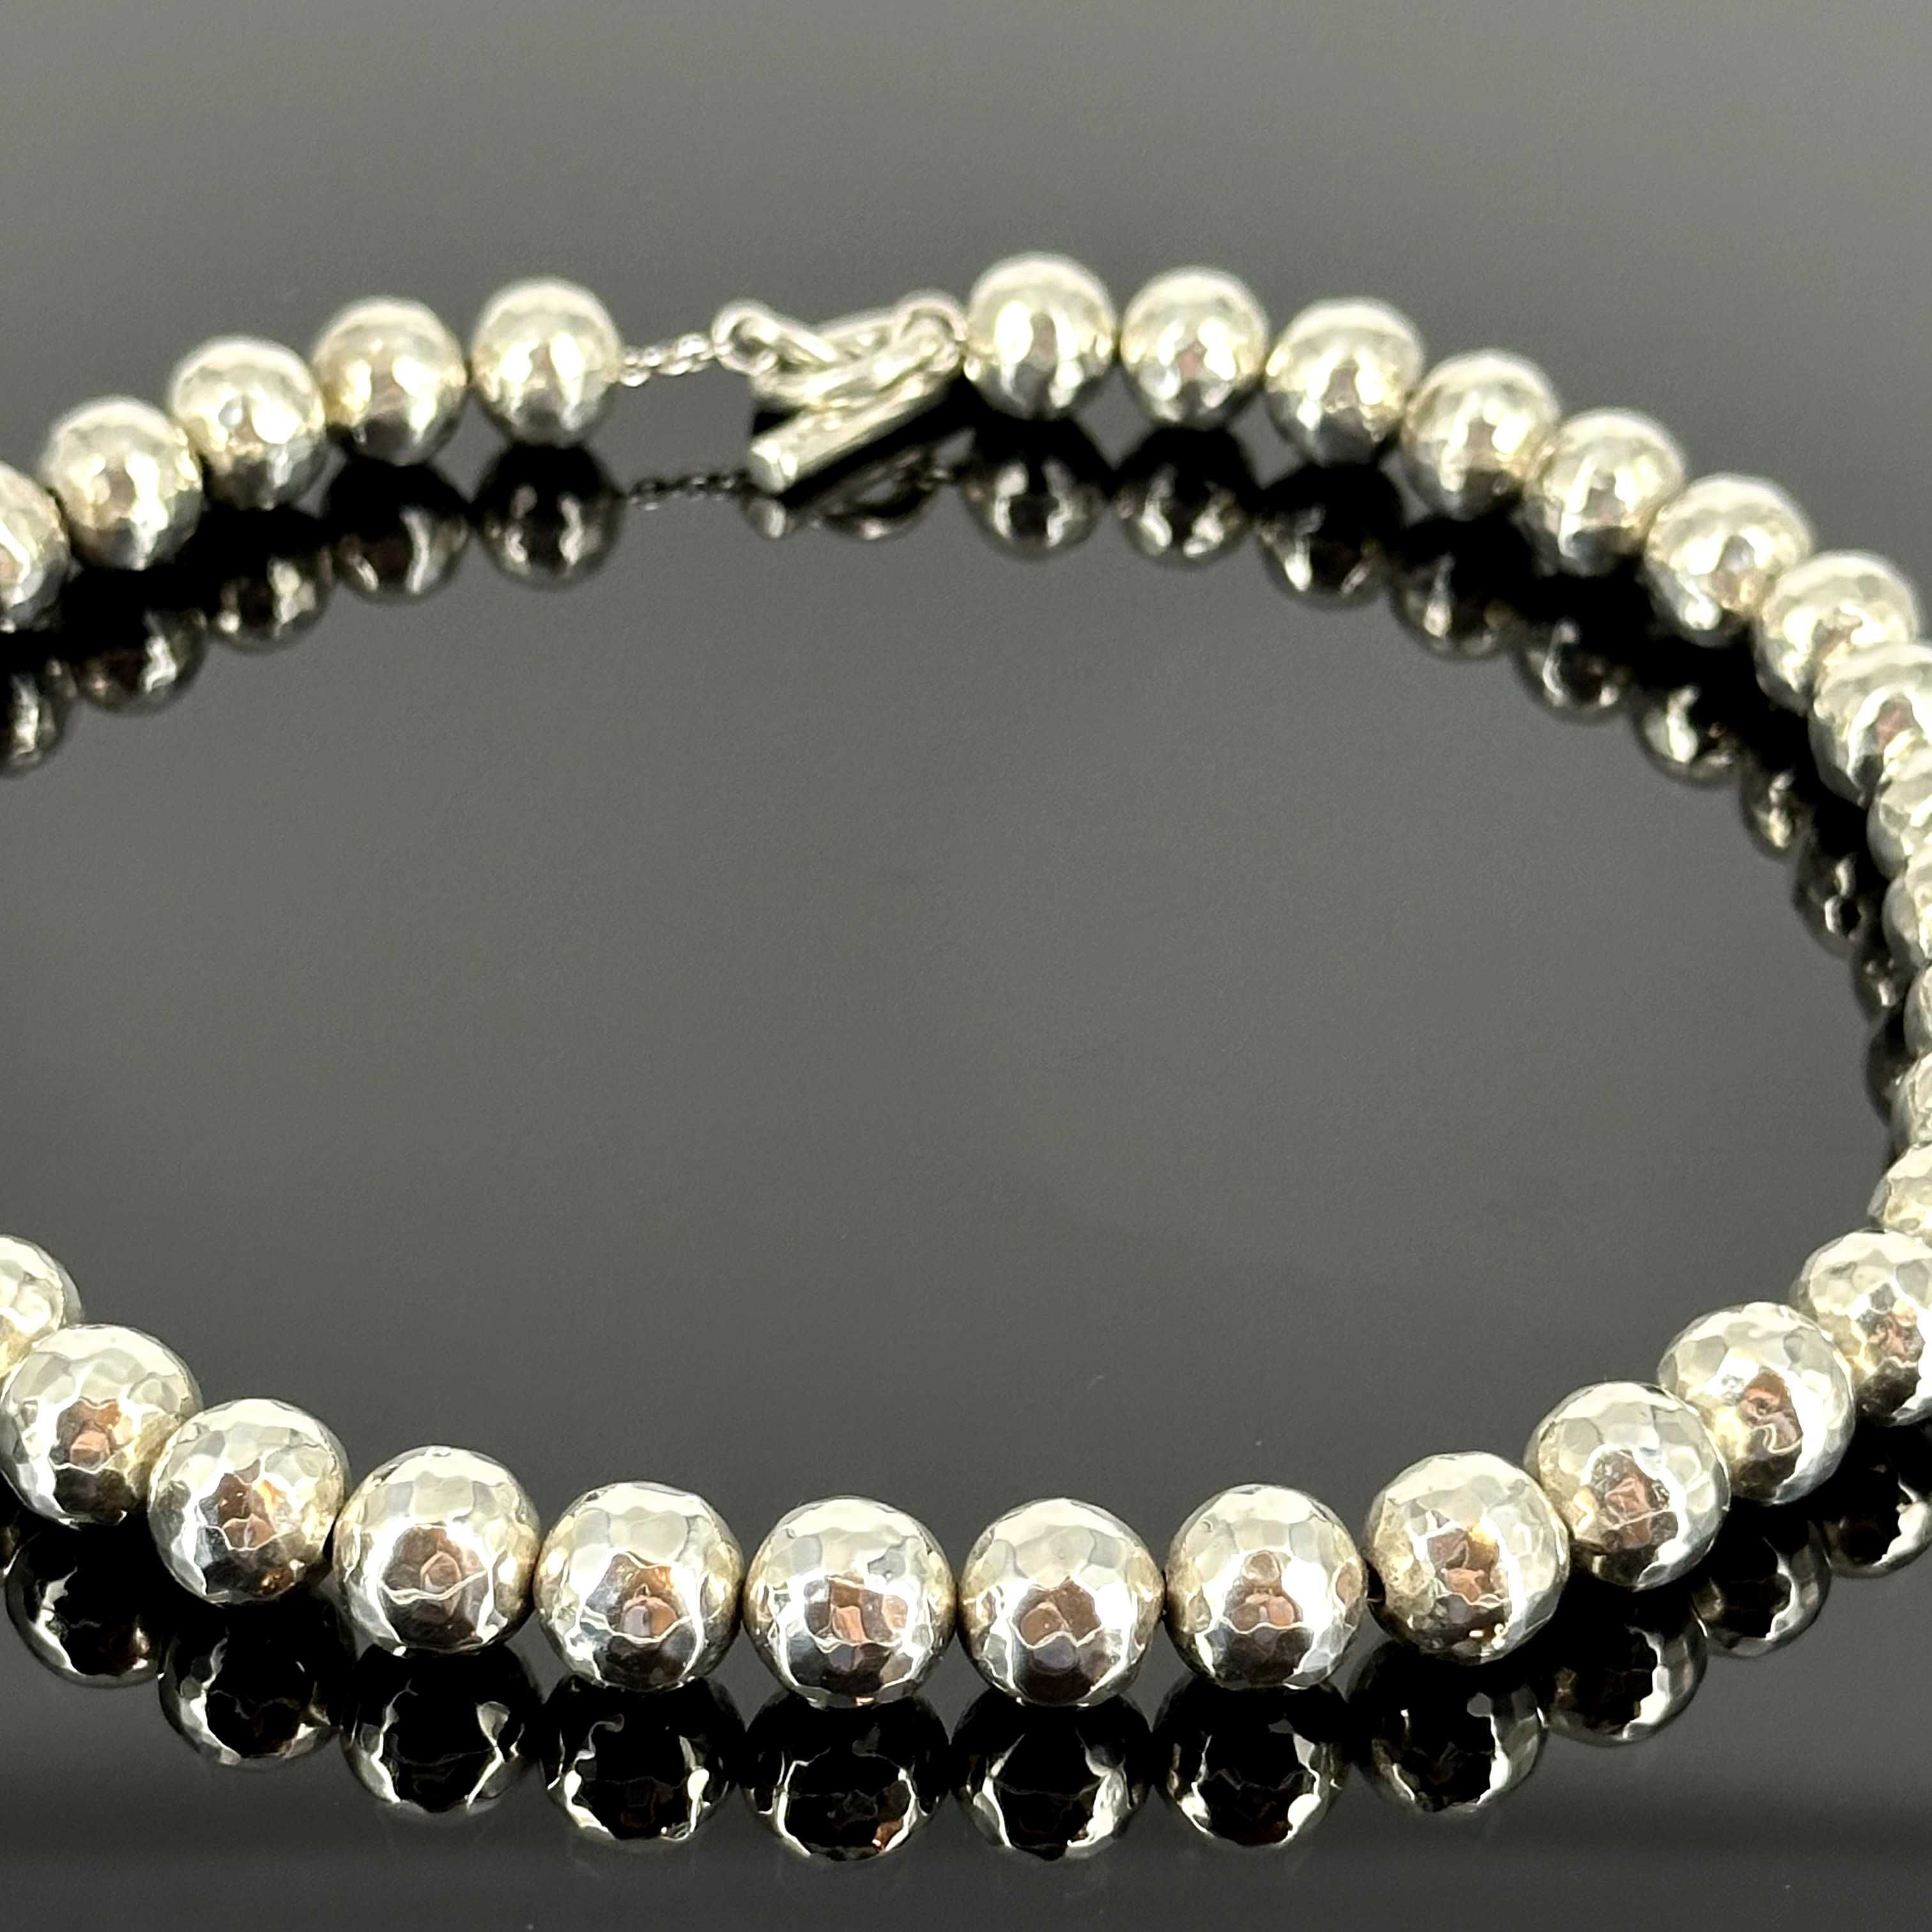 Srebro - Srebrne naszyjnik z korali srebrnych - próba srebra 925